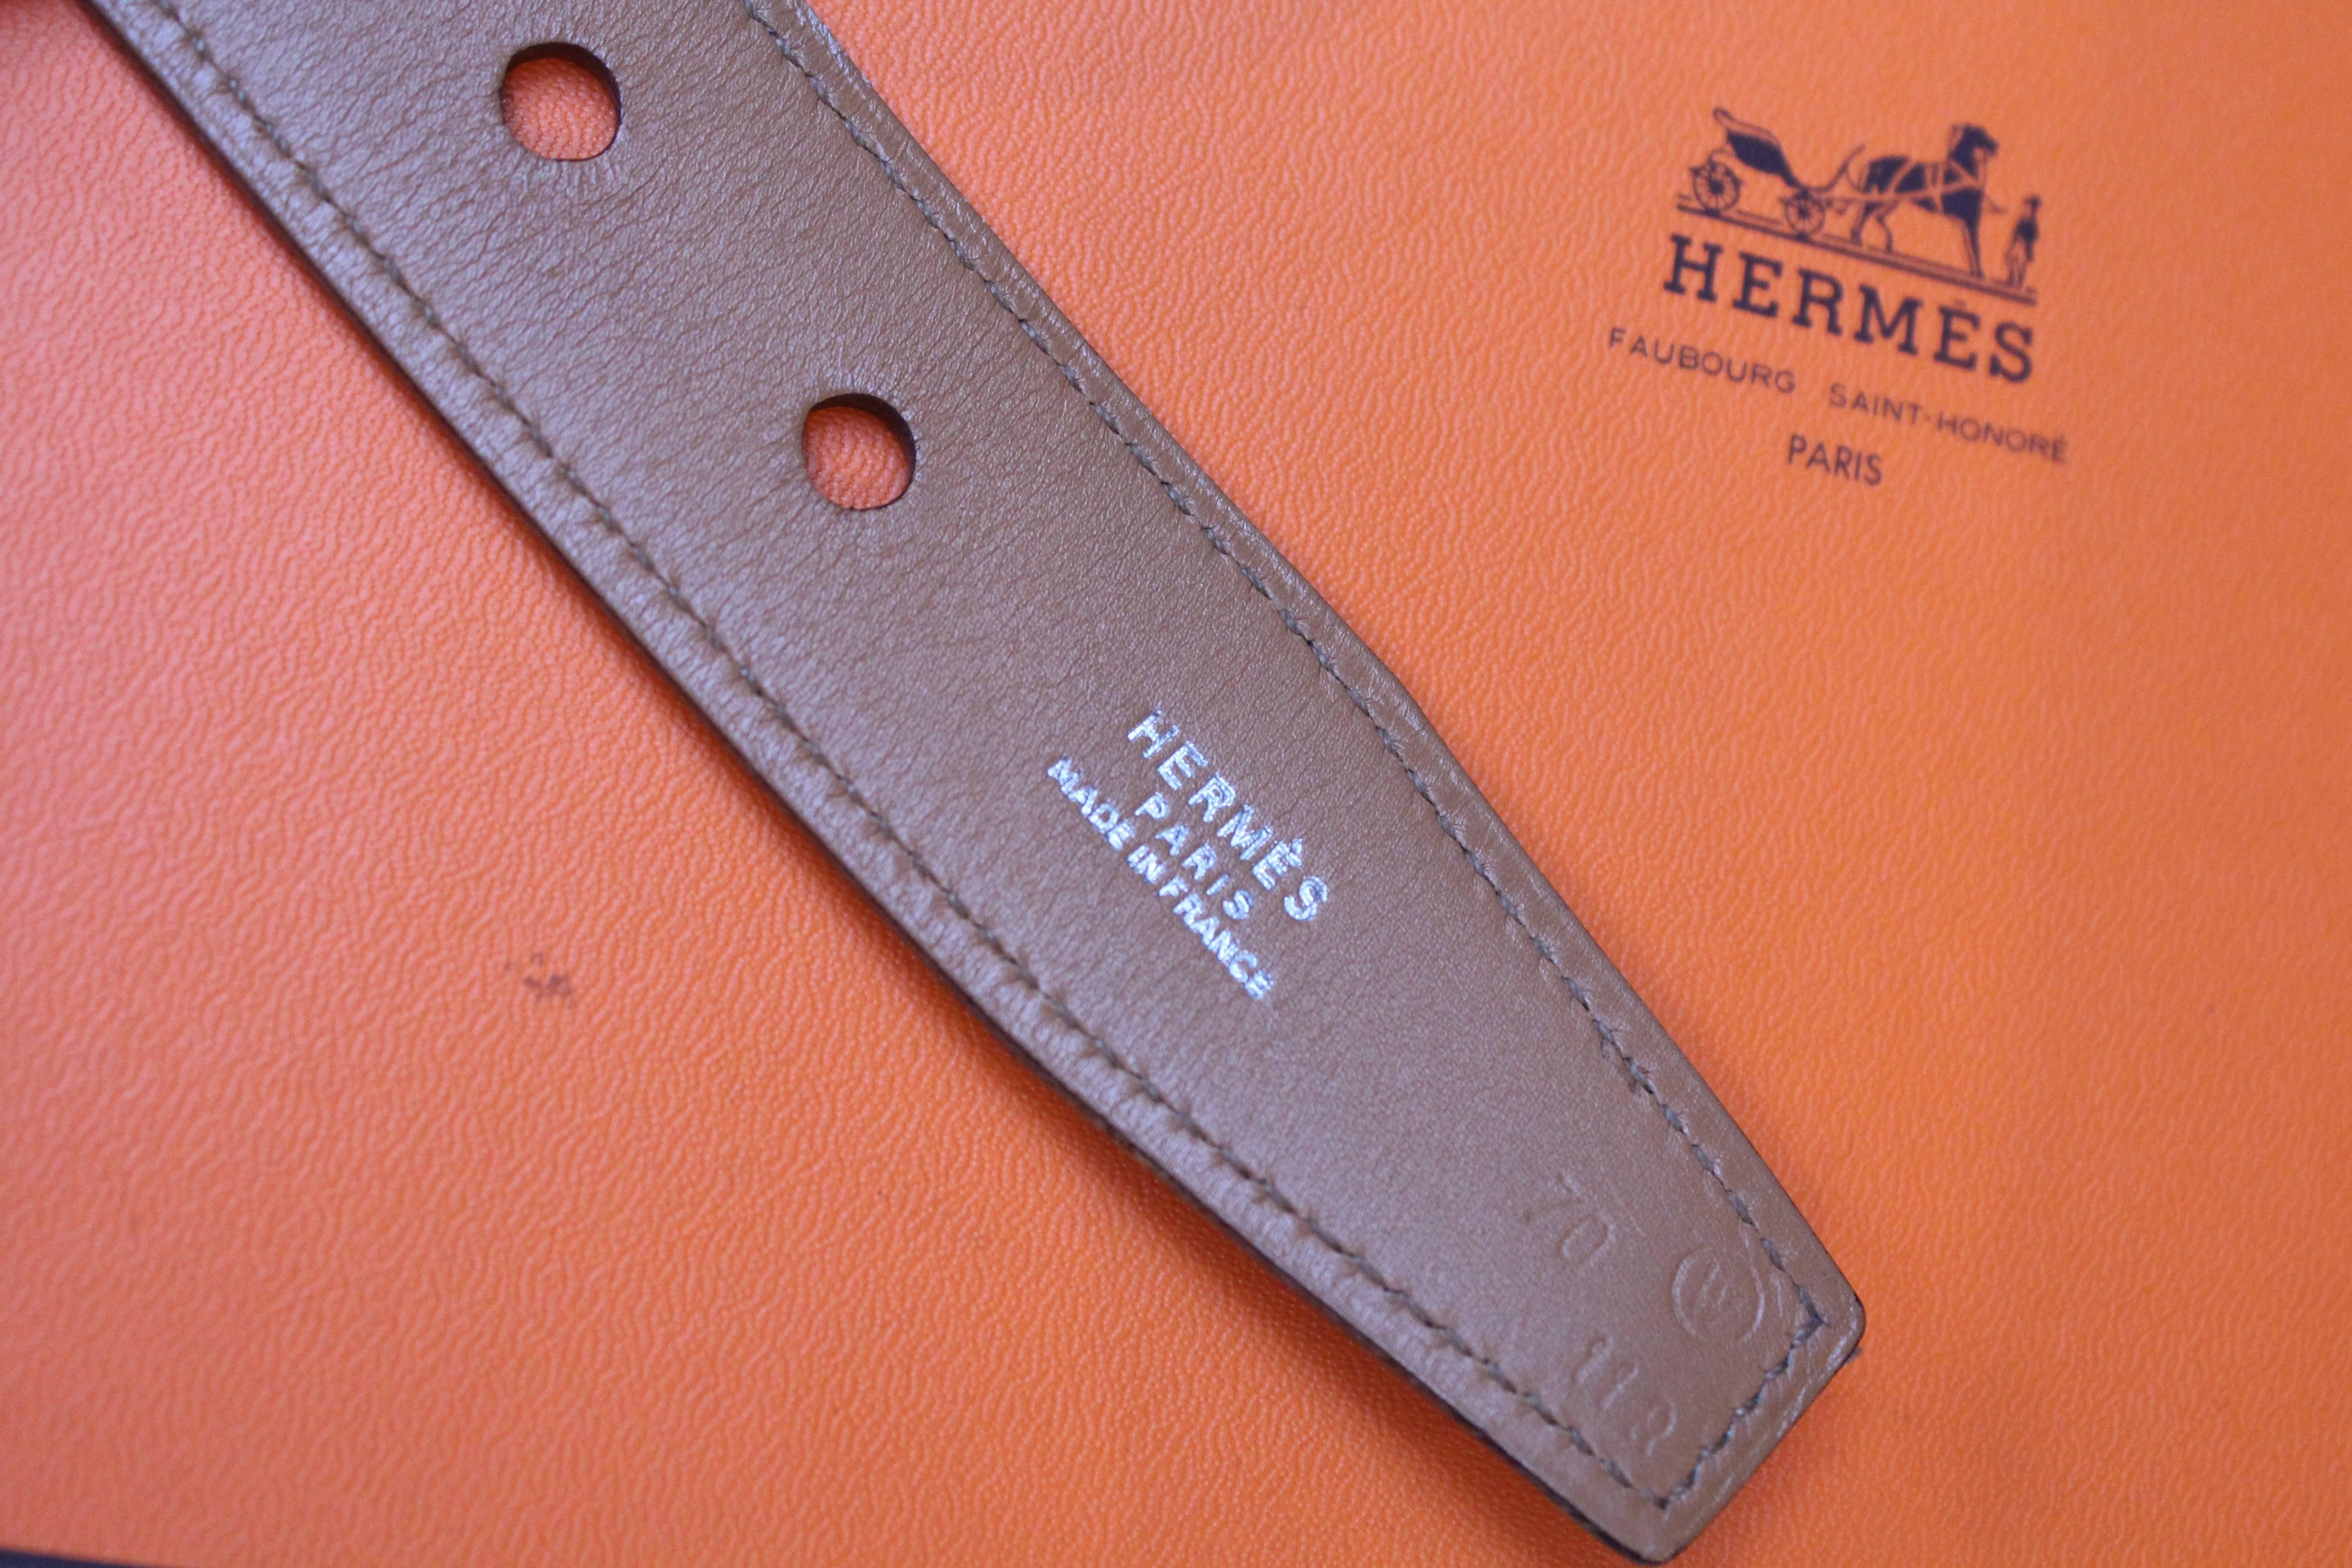 Hermès brown leather belt and clutch 4